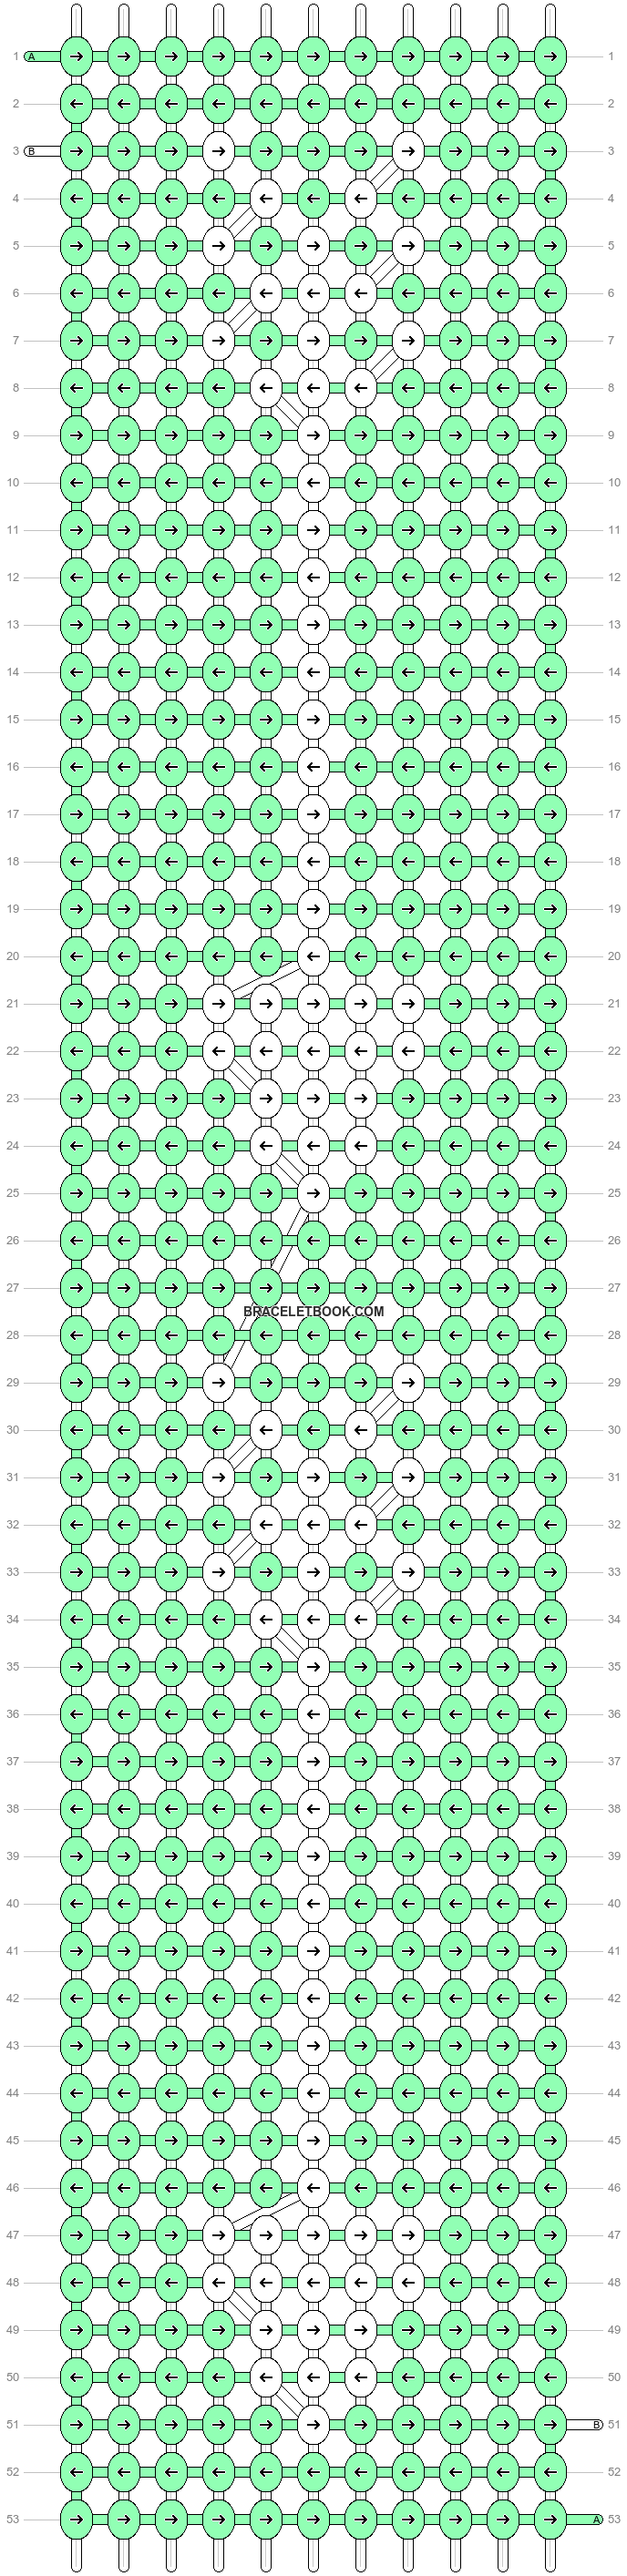 Alpha pattern #98375 variation #181191 pattern